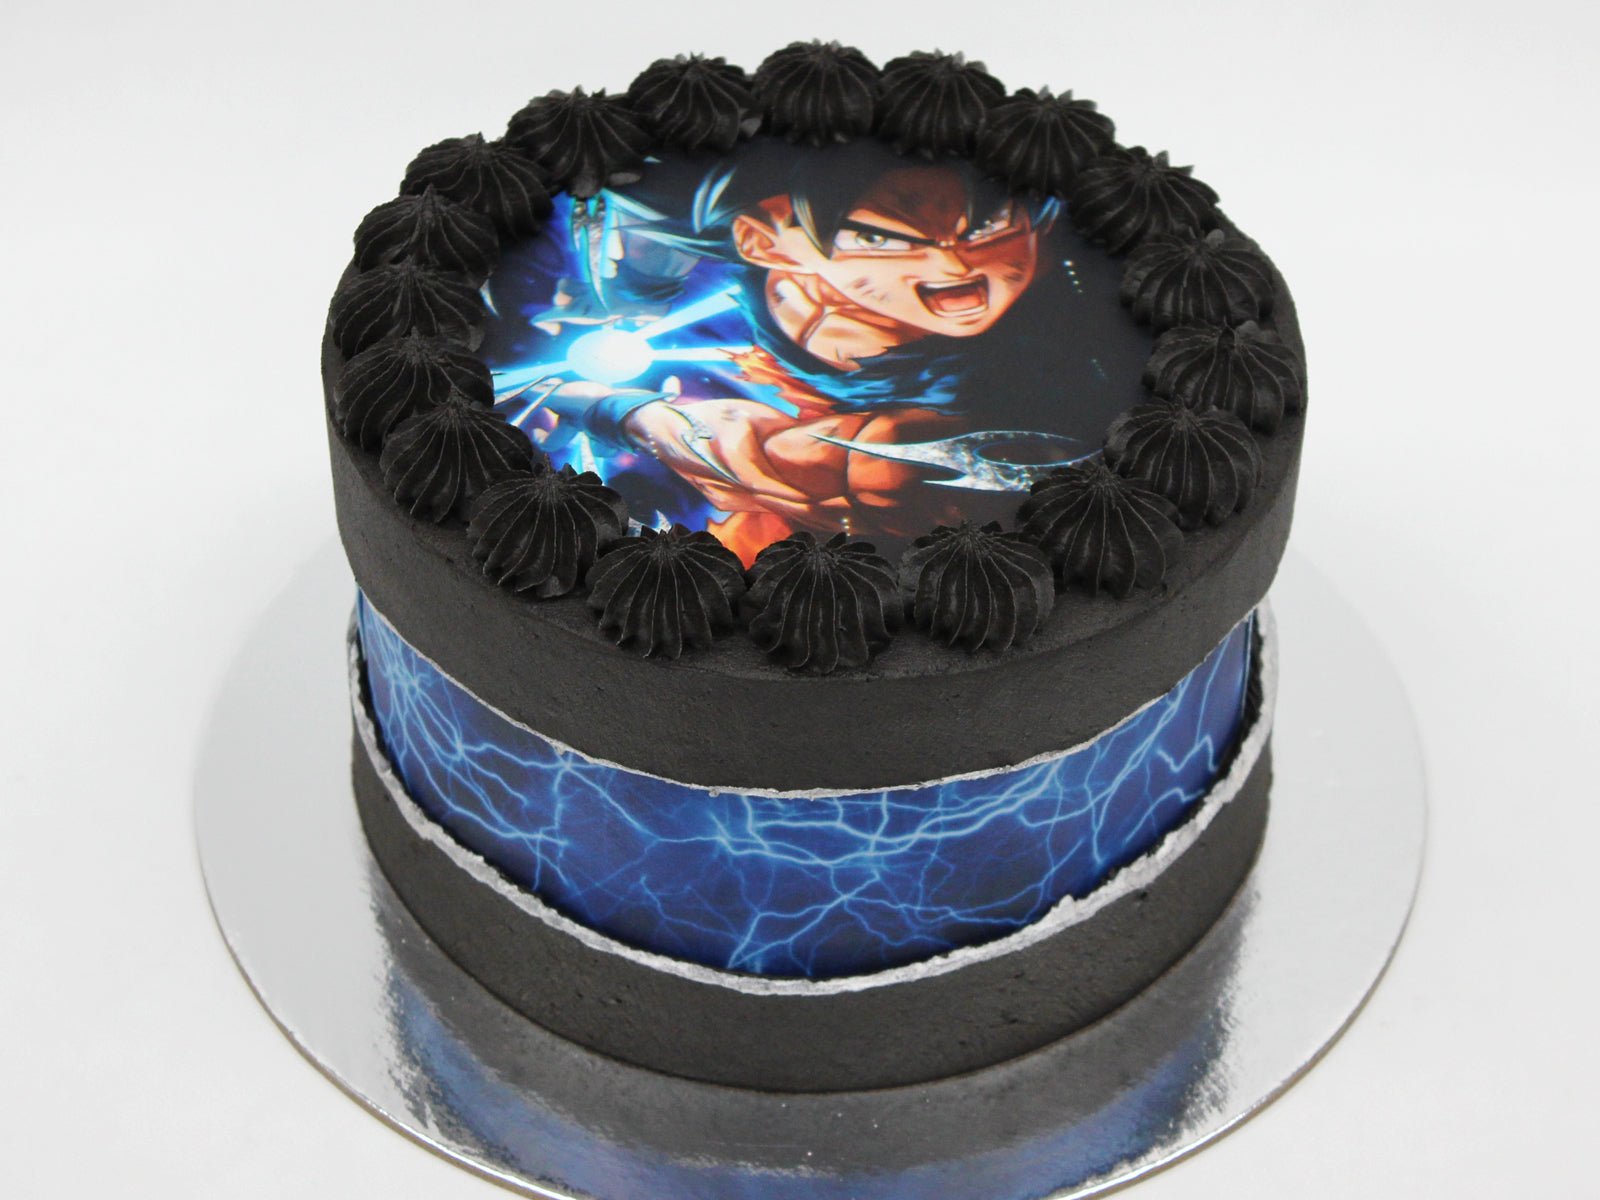 Dragon Ball Goku Cake 2 | Cakes in Dubai | Best Cakes in Dubai